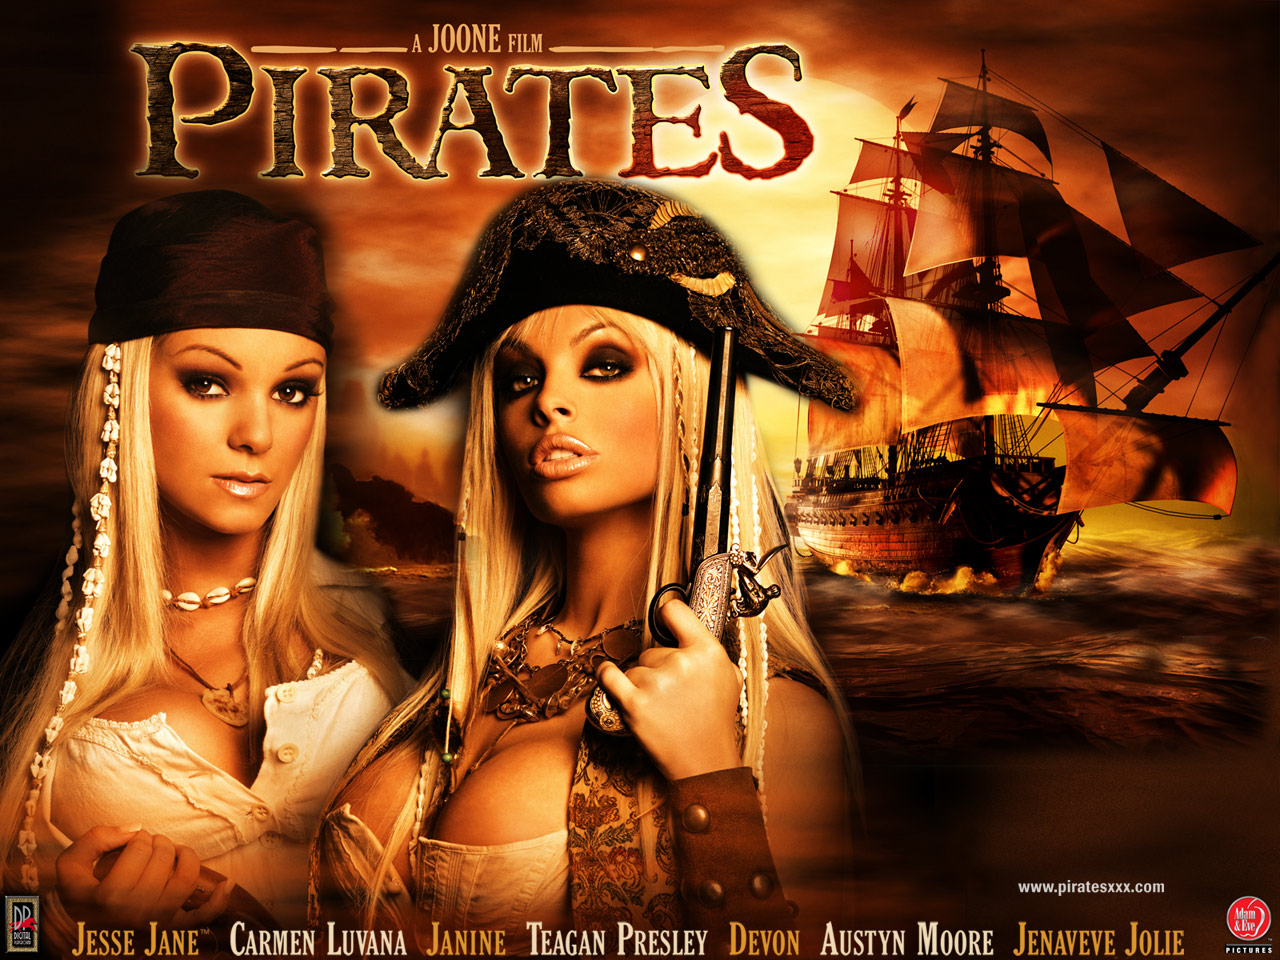 Pirates Xxxjesse Jane - Pirates Xxx Jesse Jane Lesbian | Sex Pictures Pass